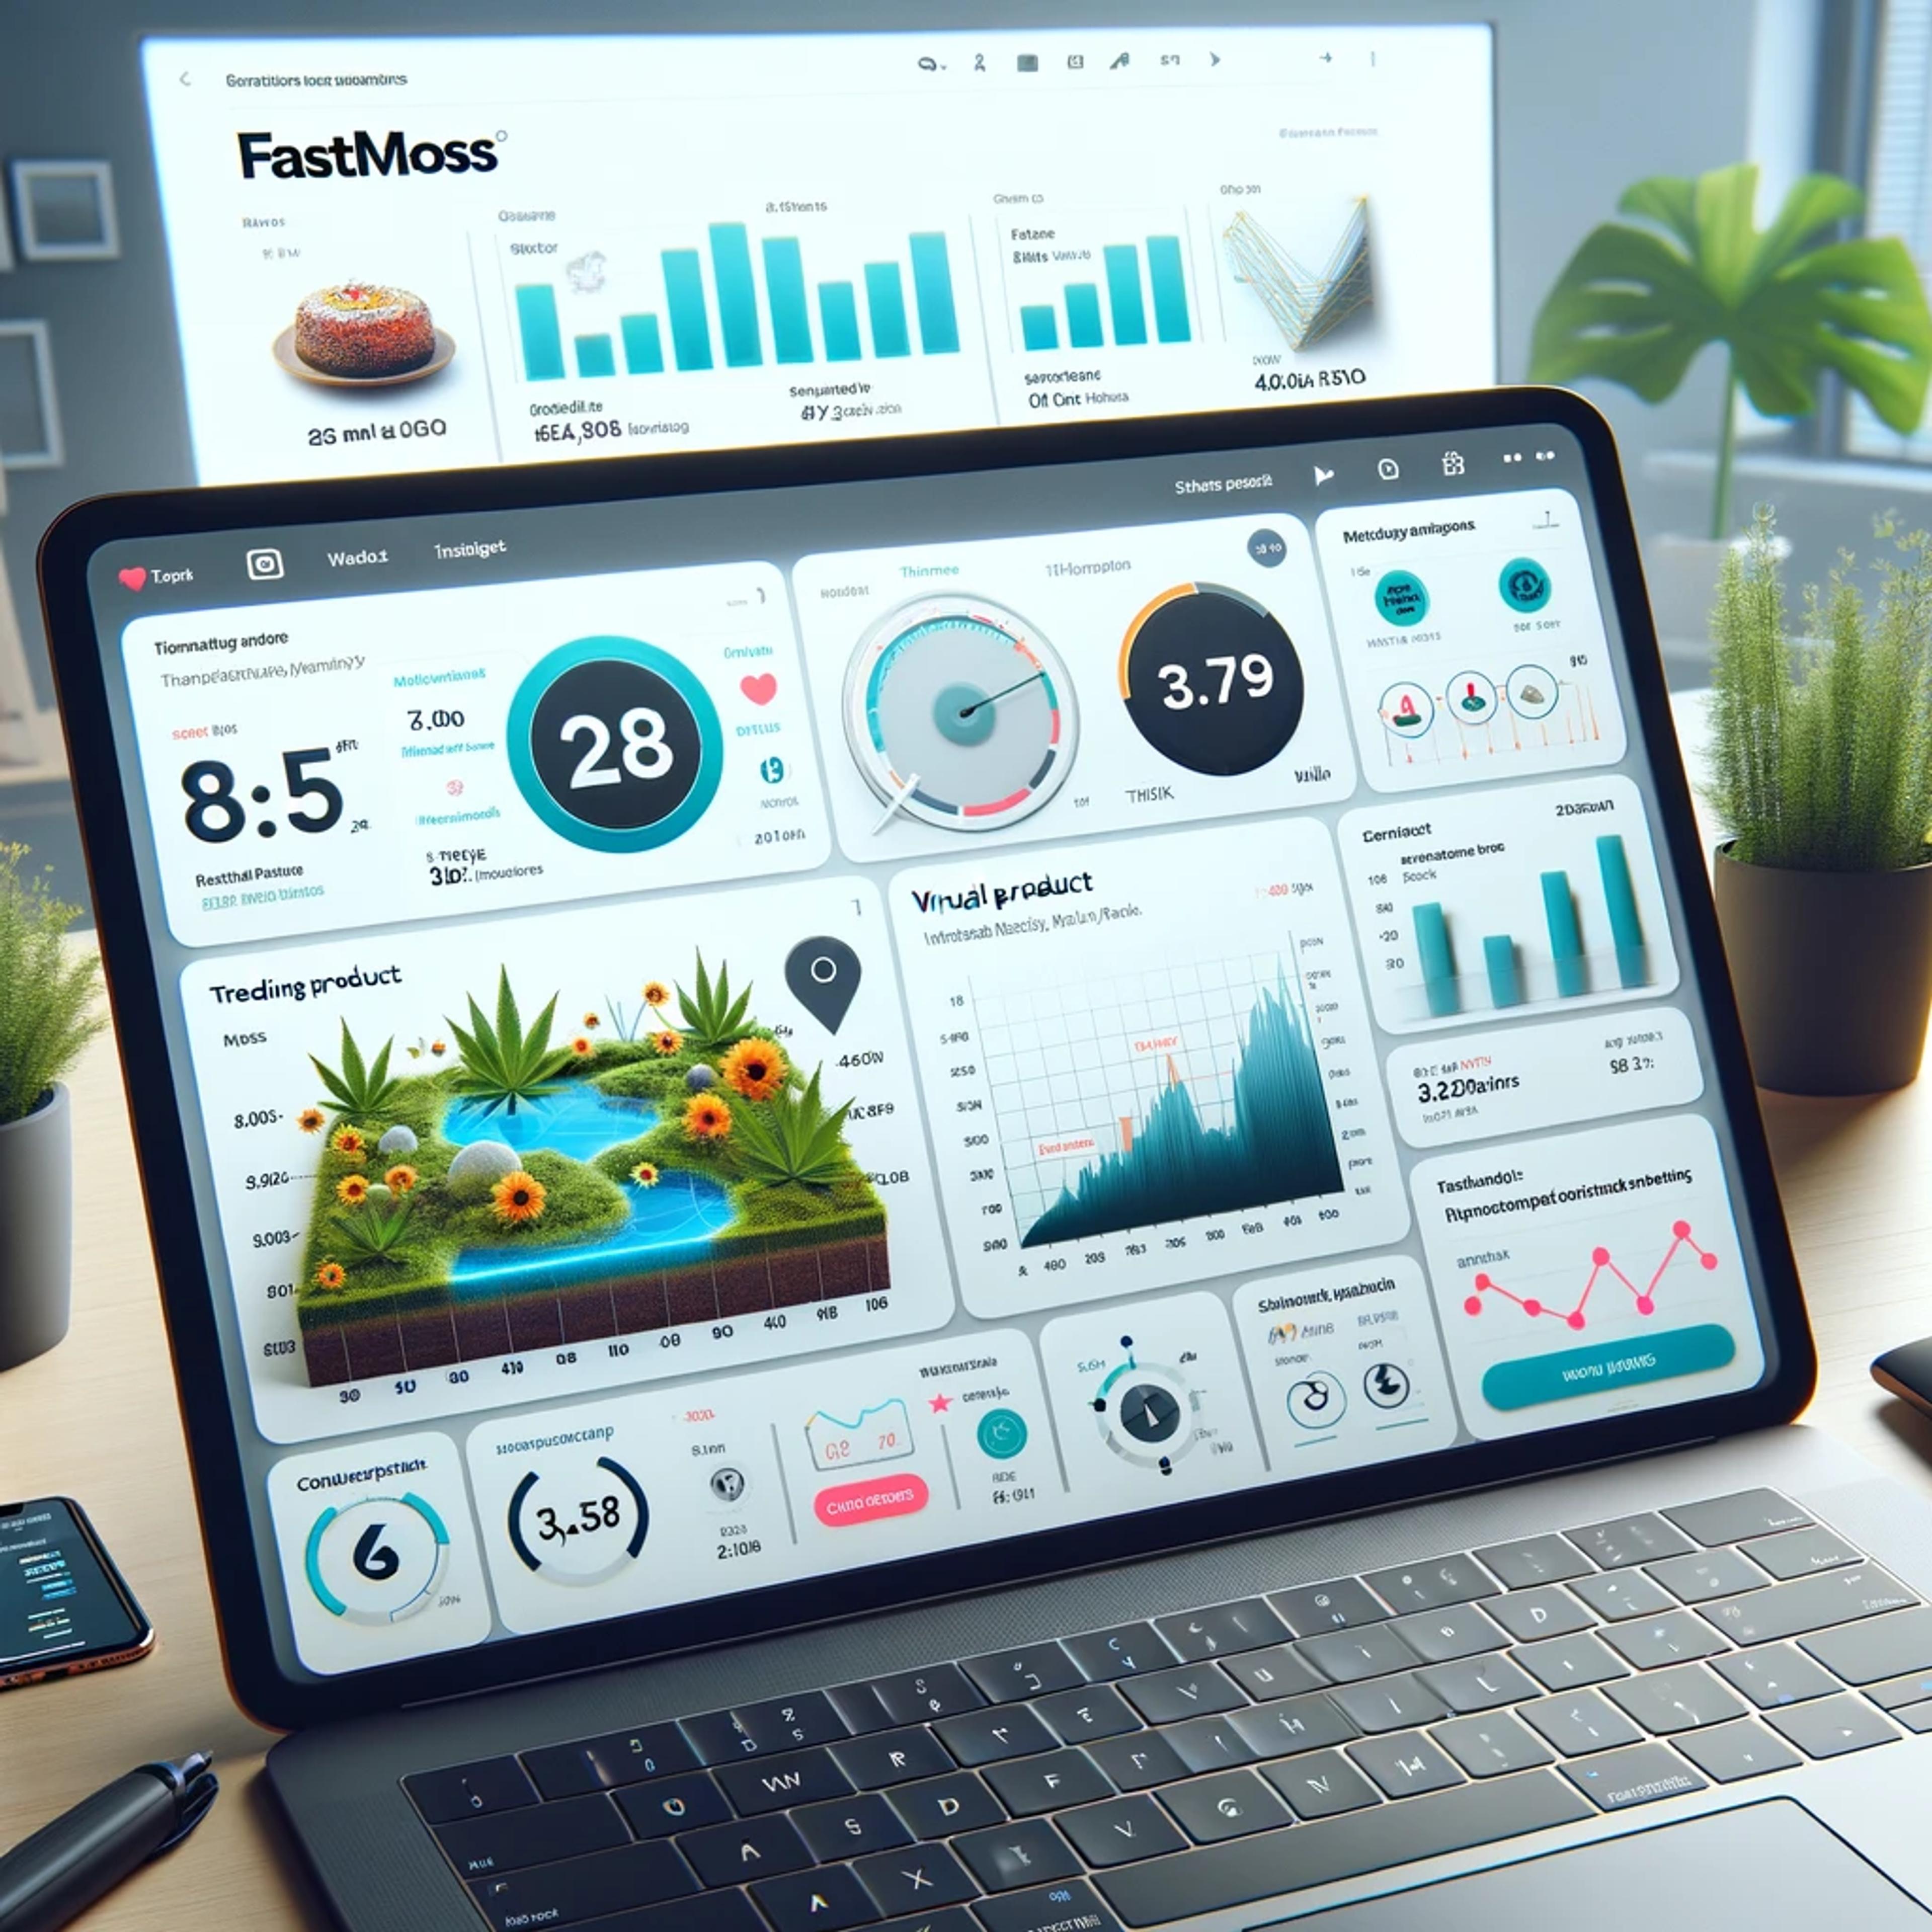 Illustration of a laptop presenting TikTok analytics on FastMoss software